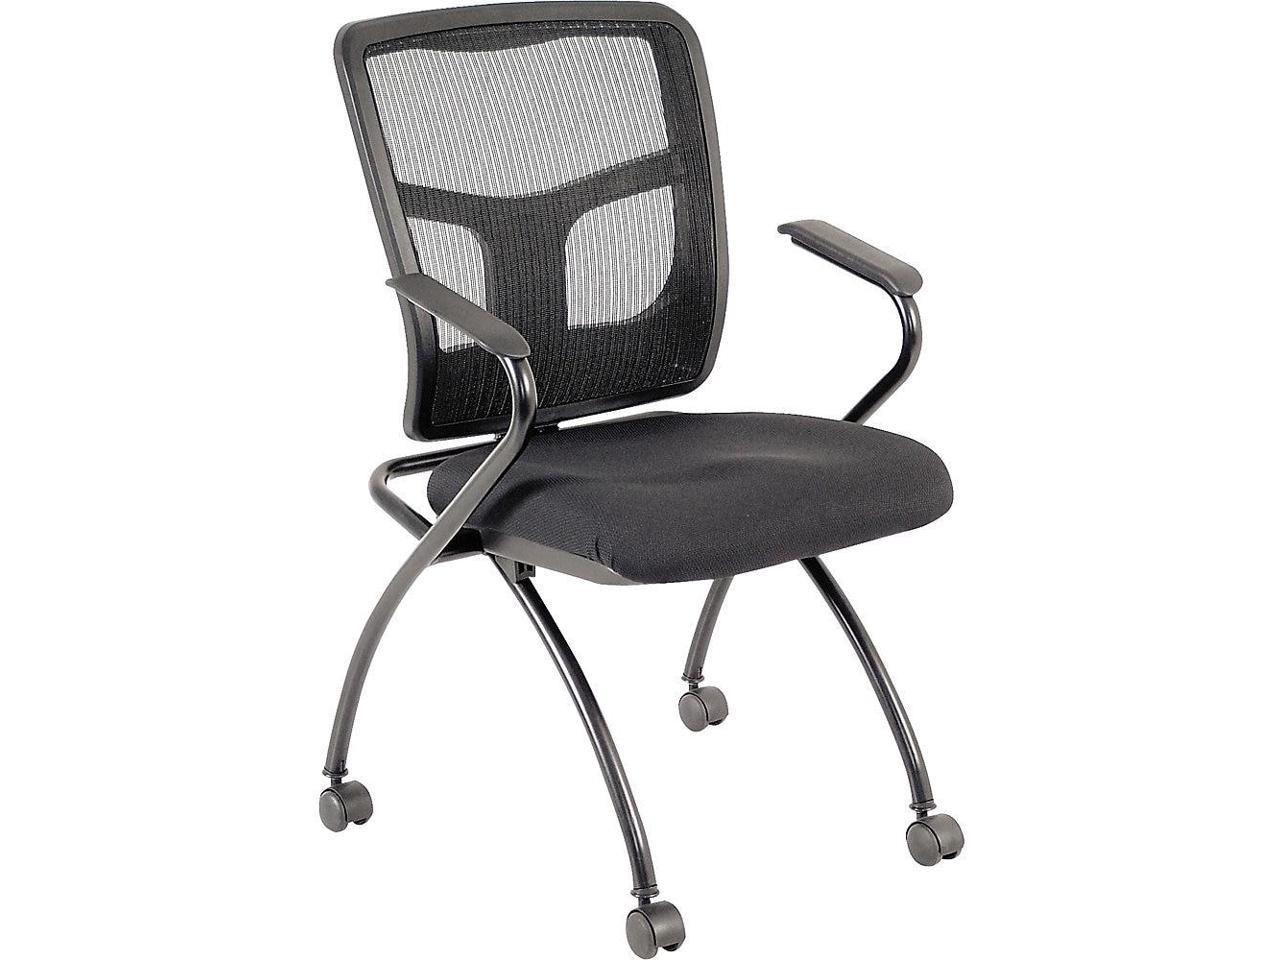 Lorell Mesh Back Fabric Seat Nesting Chairs - image 4 of 10